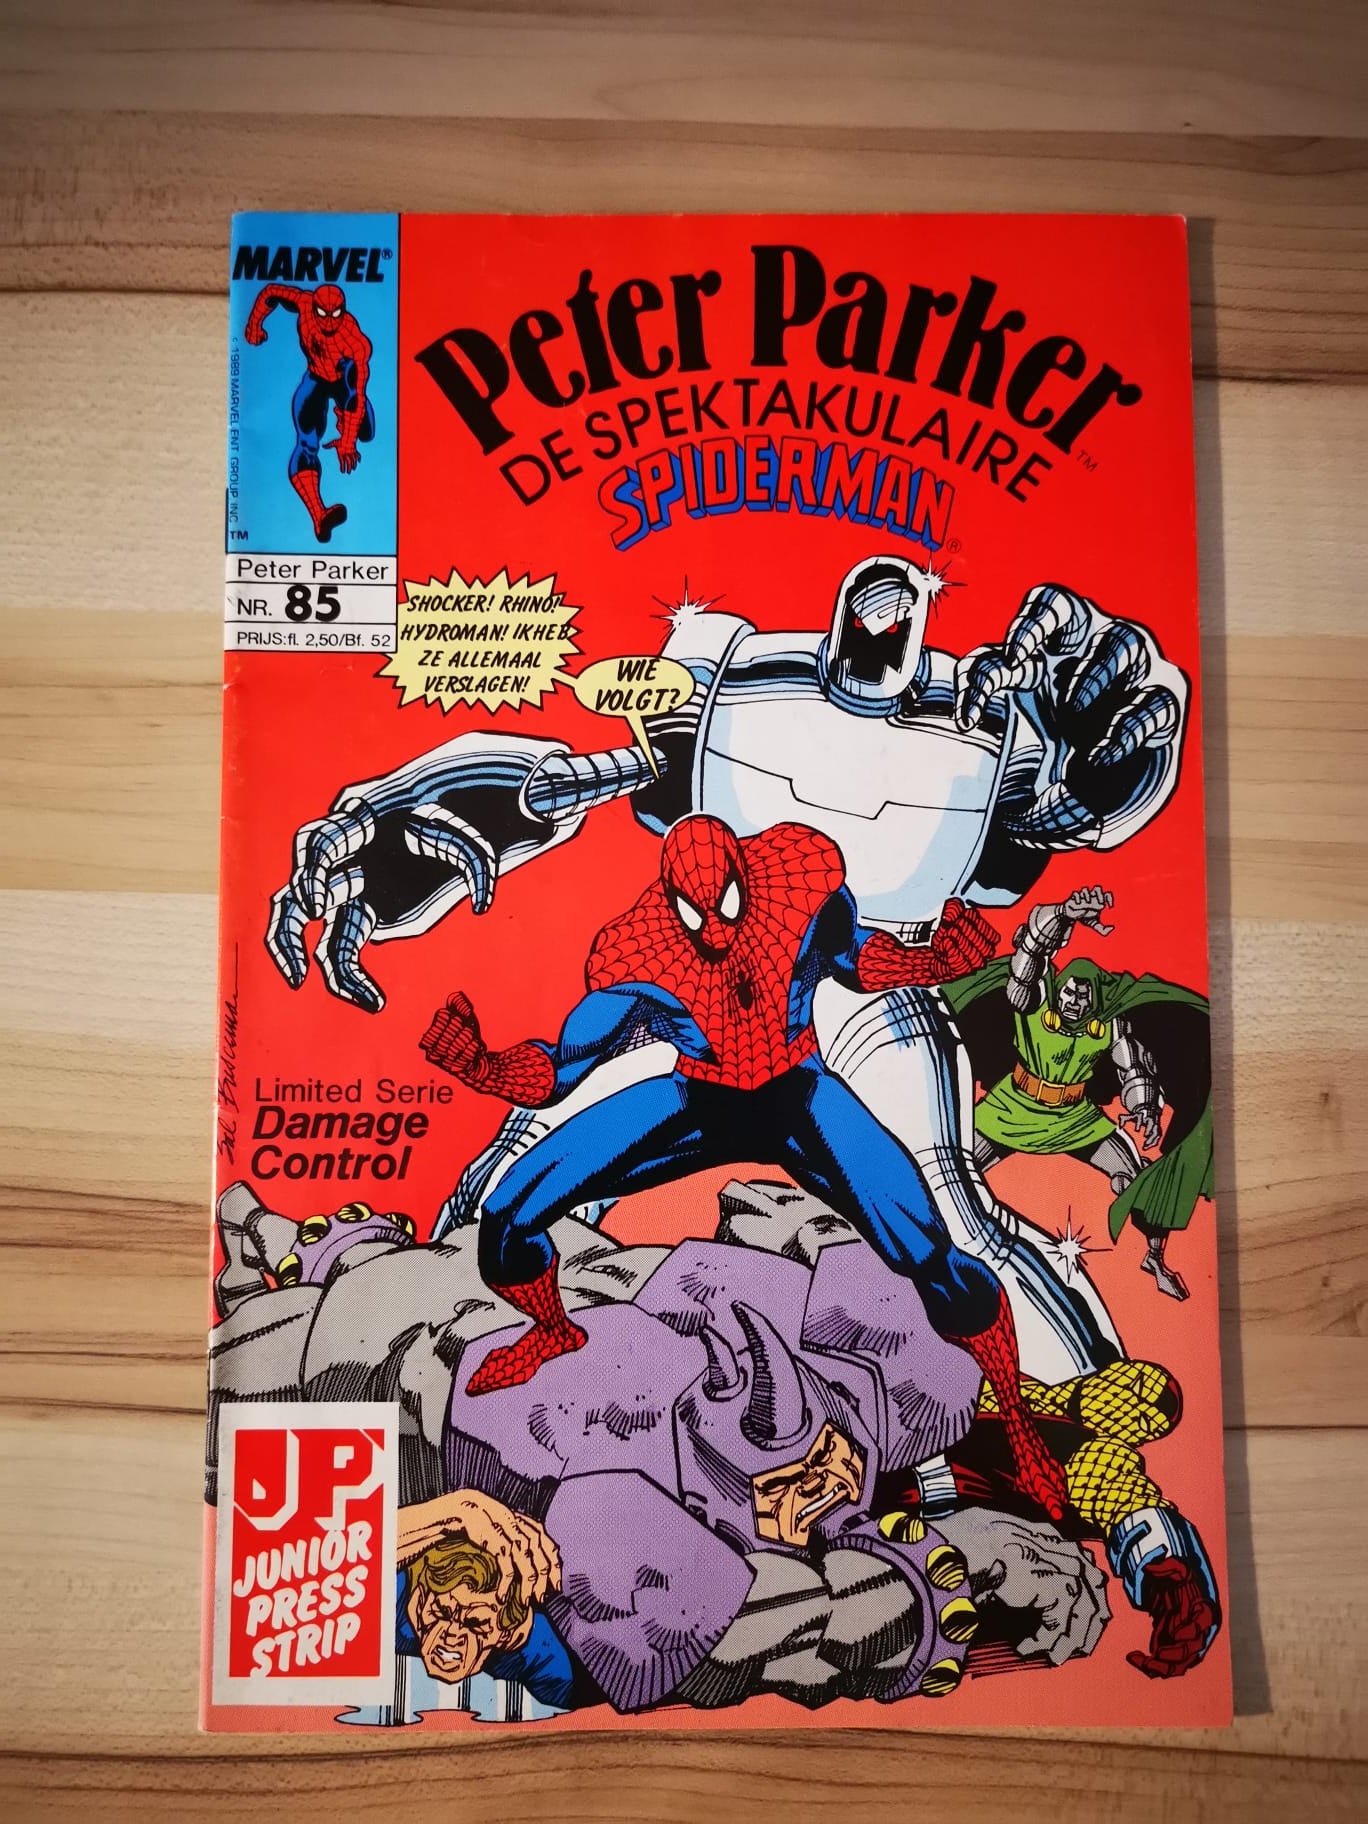 Peter Parker De spektakulaire spiderman #85